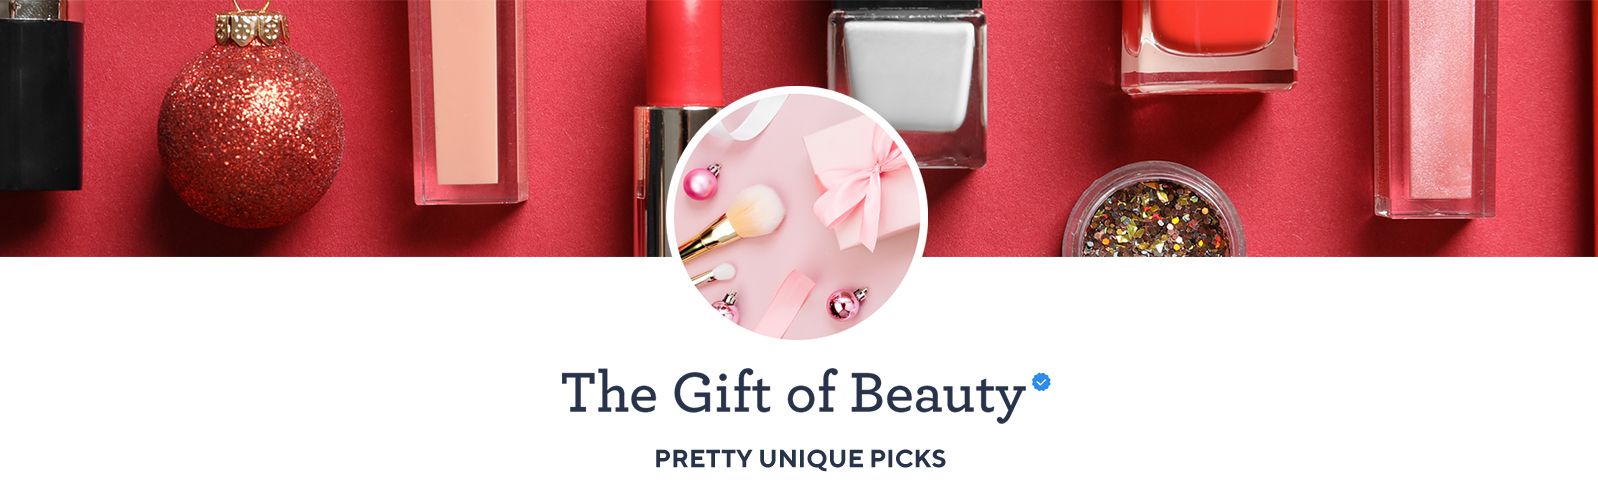 The Gift of Beauty. Pretty Unique Picks